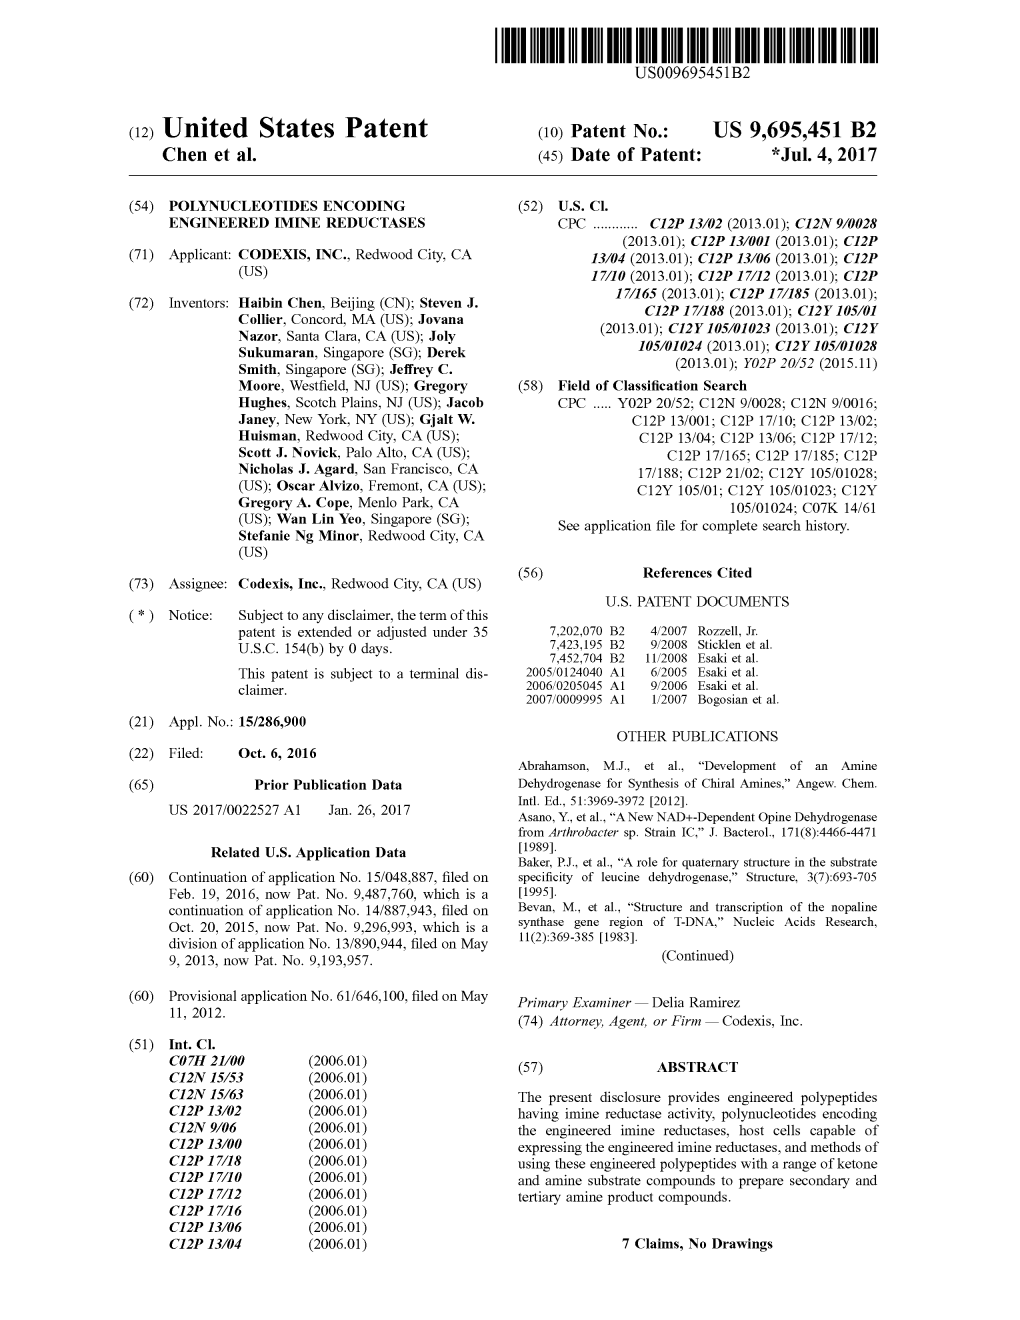 (12) United States Patent (10) Patent No.: US 9,695.451 B2 Chen Et Al